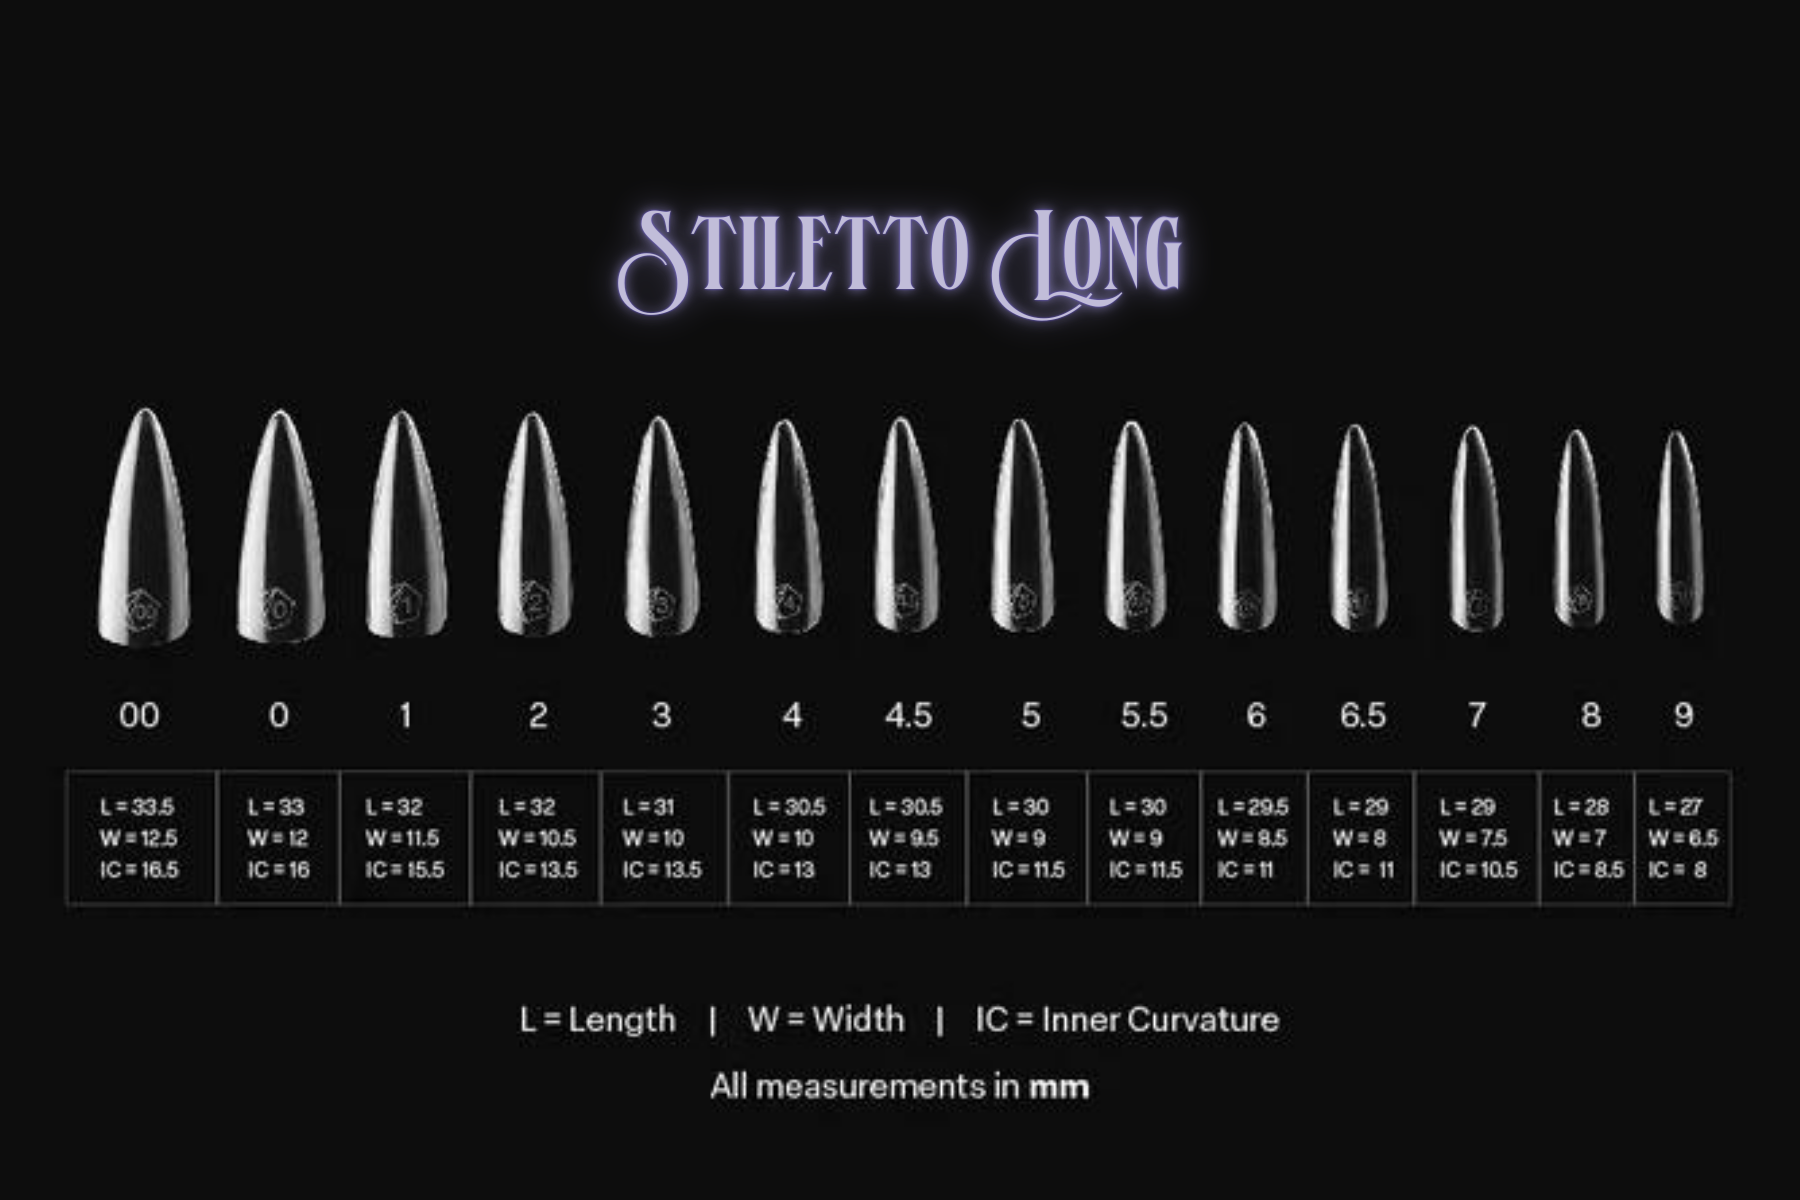 Stiletto_Long_0b841bf8-983b-49c3-9d20-3d23591cdca9